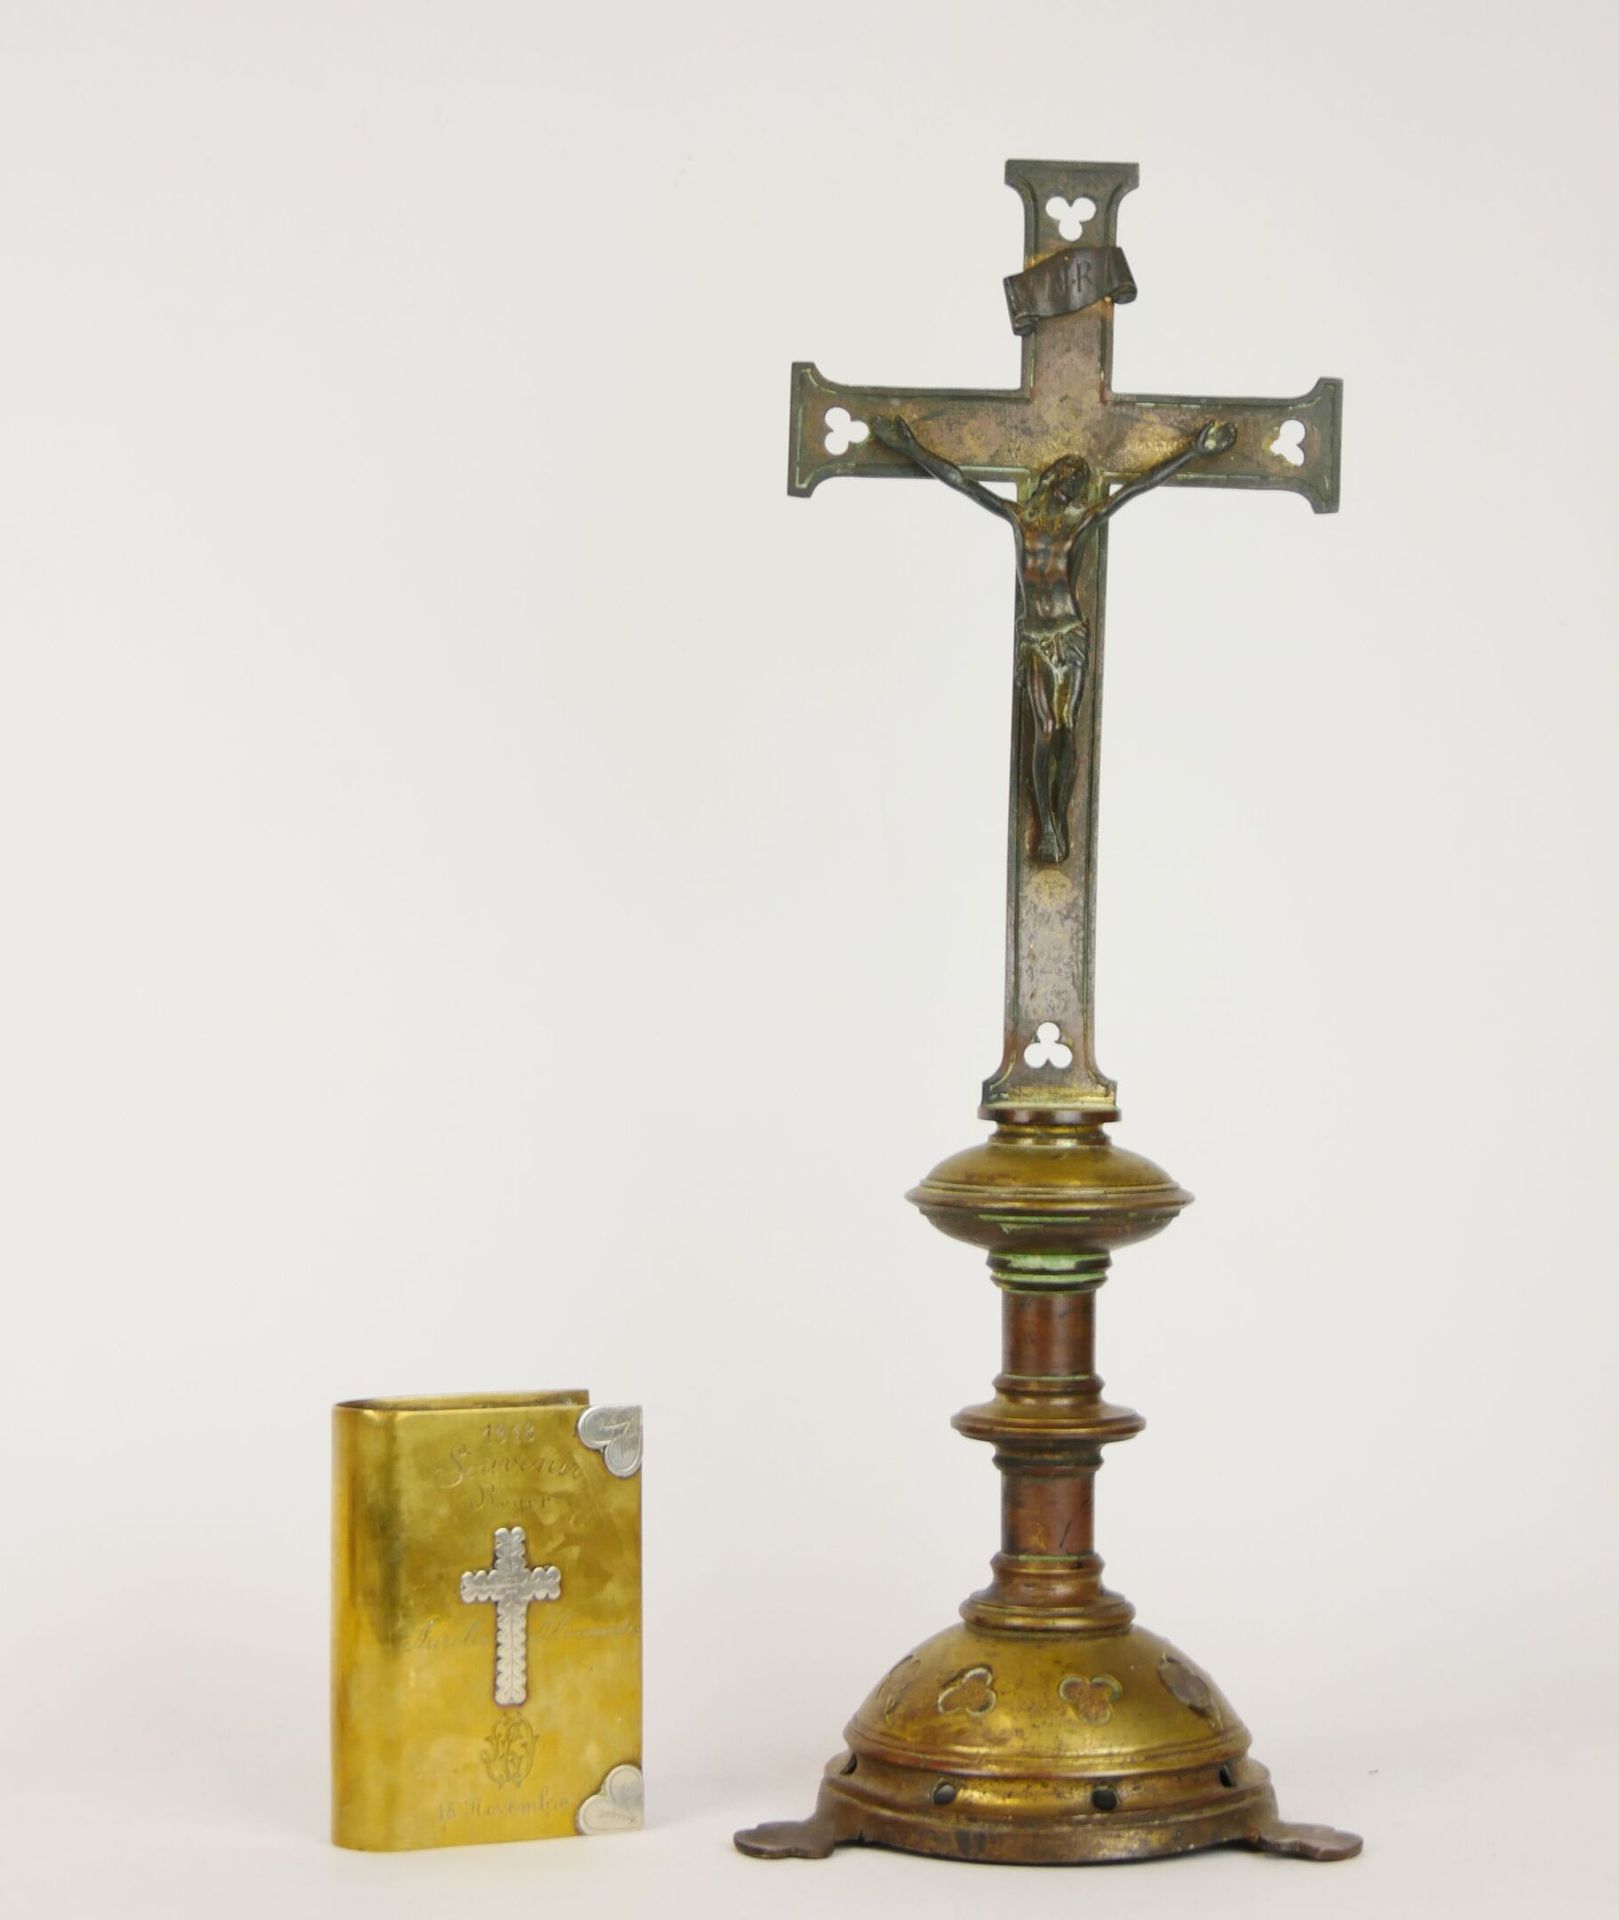 Null 书籍打火机，模拟一本镀金黄铜和银金属的书，上面写着 "1918年11月18日罗杰-奥雷利-亚历山大纪念册"。

尺寸：4 x 12 x 8.5厘米

&hellip;